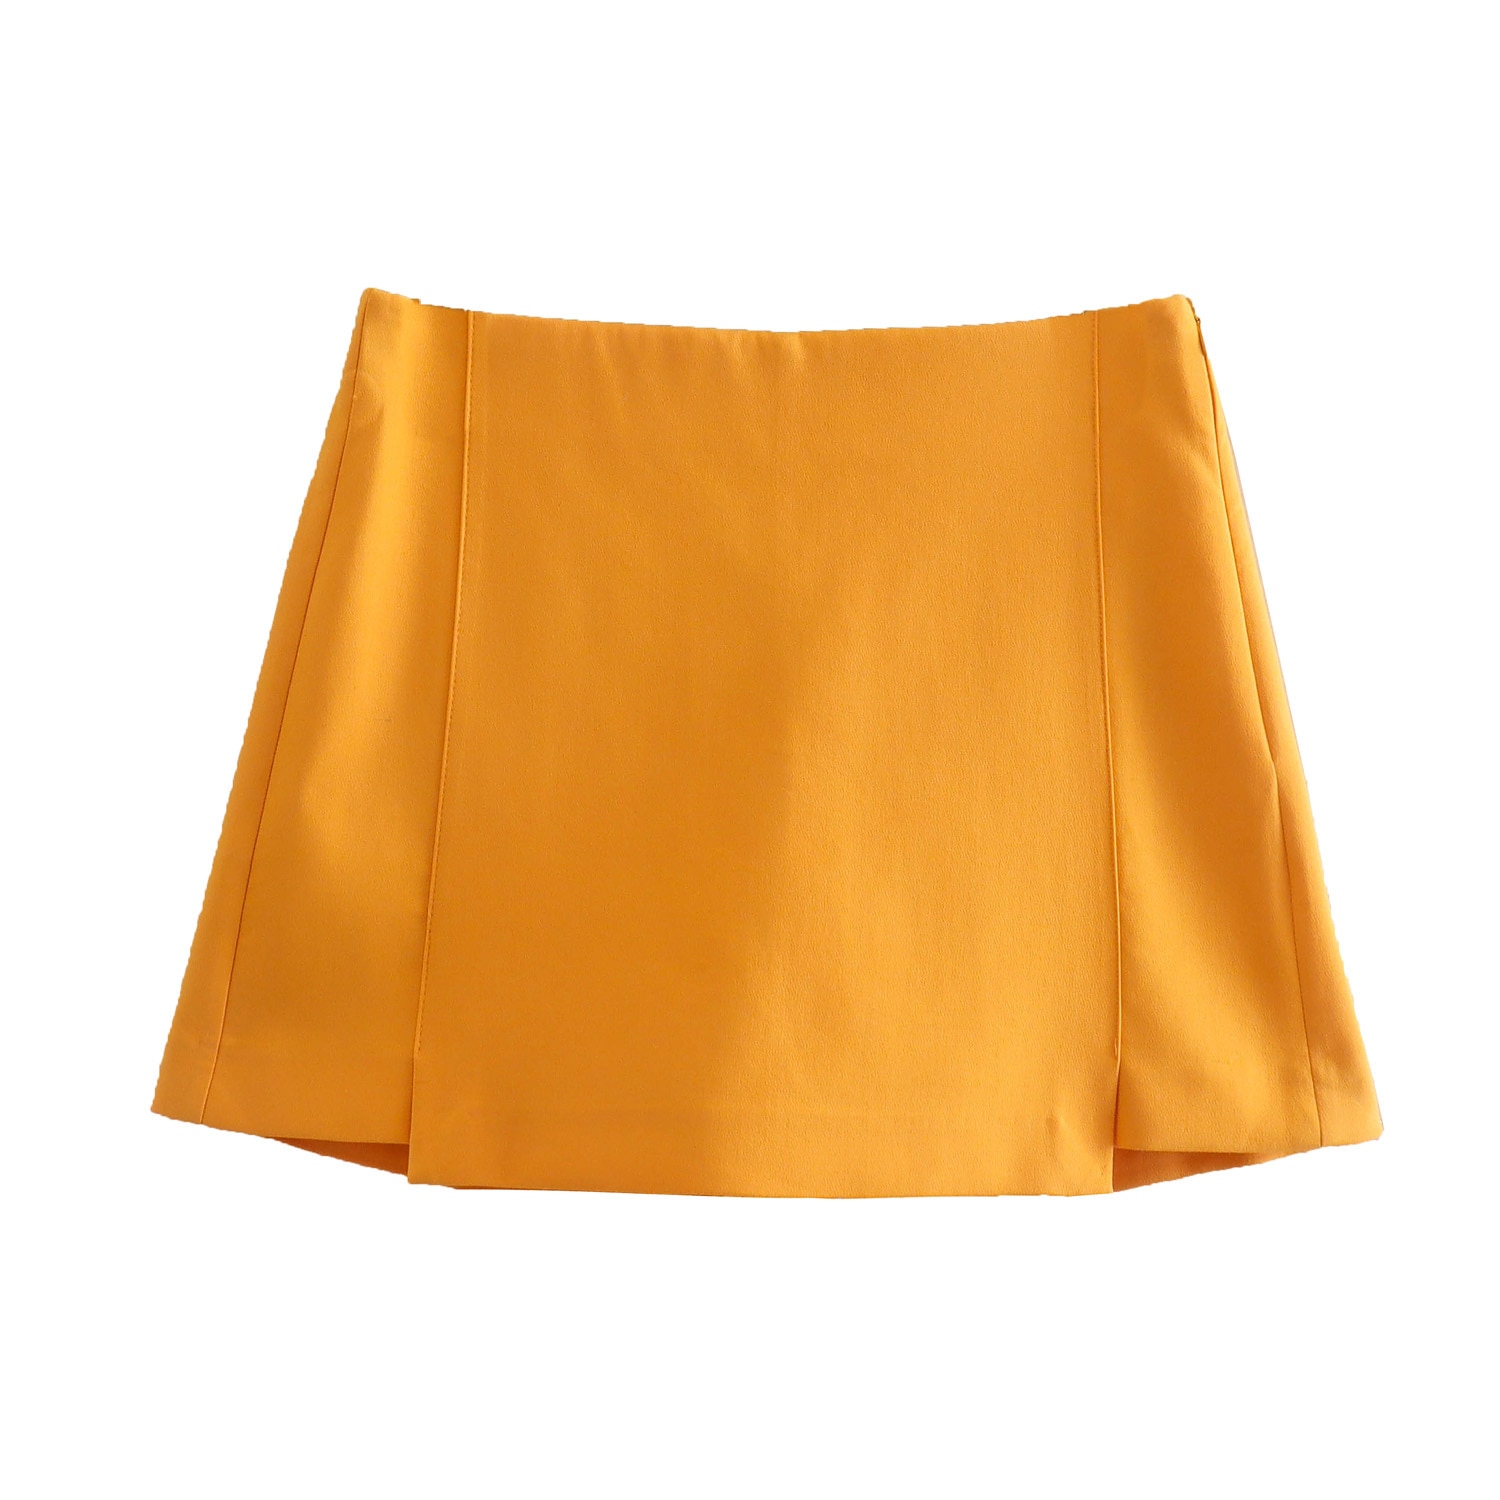 Zevity-Women-Fashion-Solid-Color-Hem-Irregular-Summer-Shorts-Lady-Chic-Side-Zipper-Casual-Shorts-Skirts-4